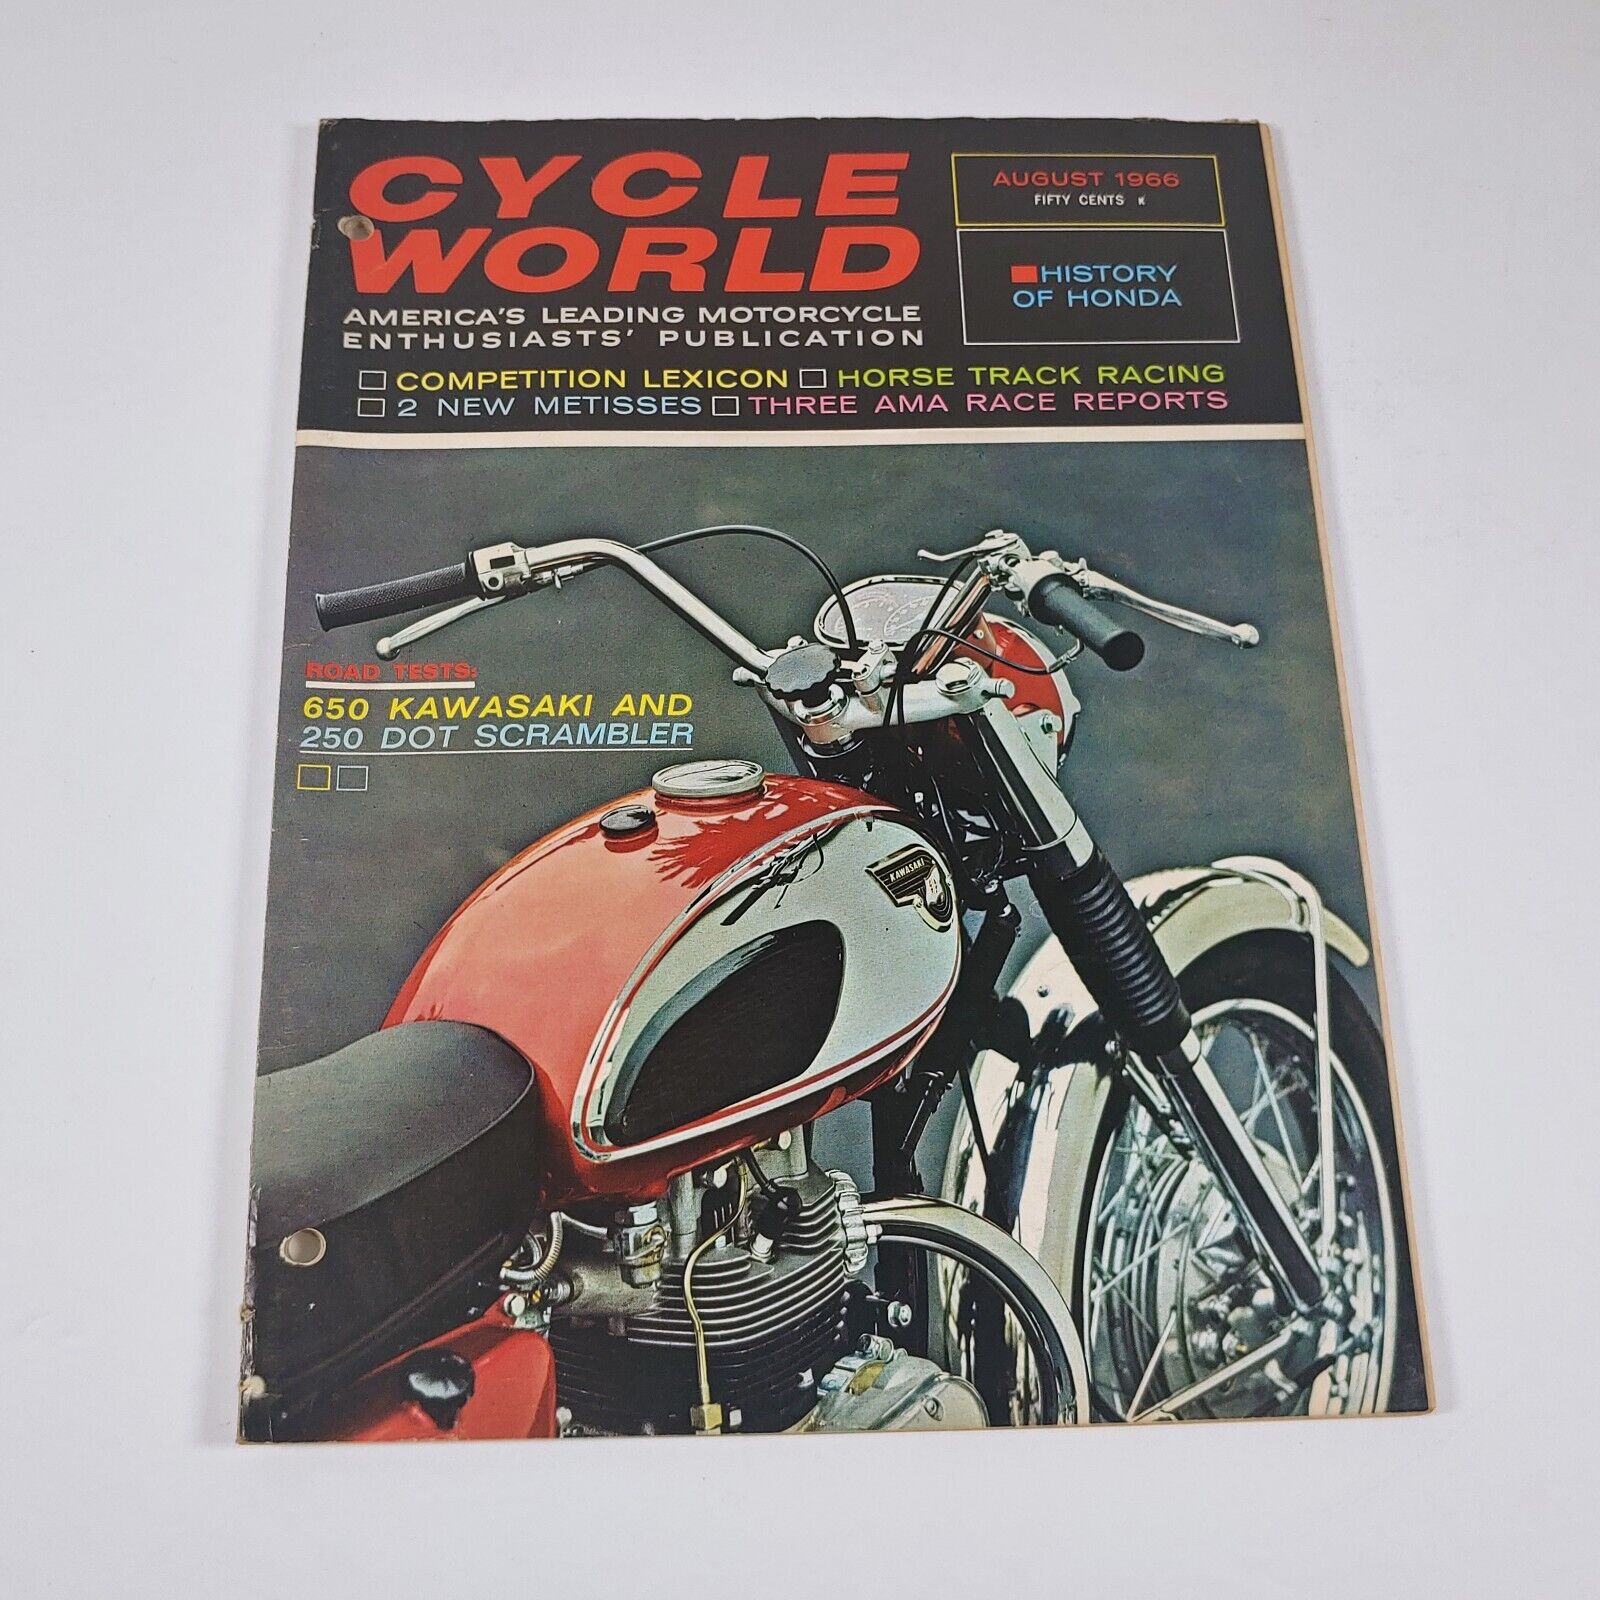 Cycle World Magazine August 1966 Kawasaki 650 On Cover